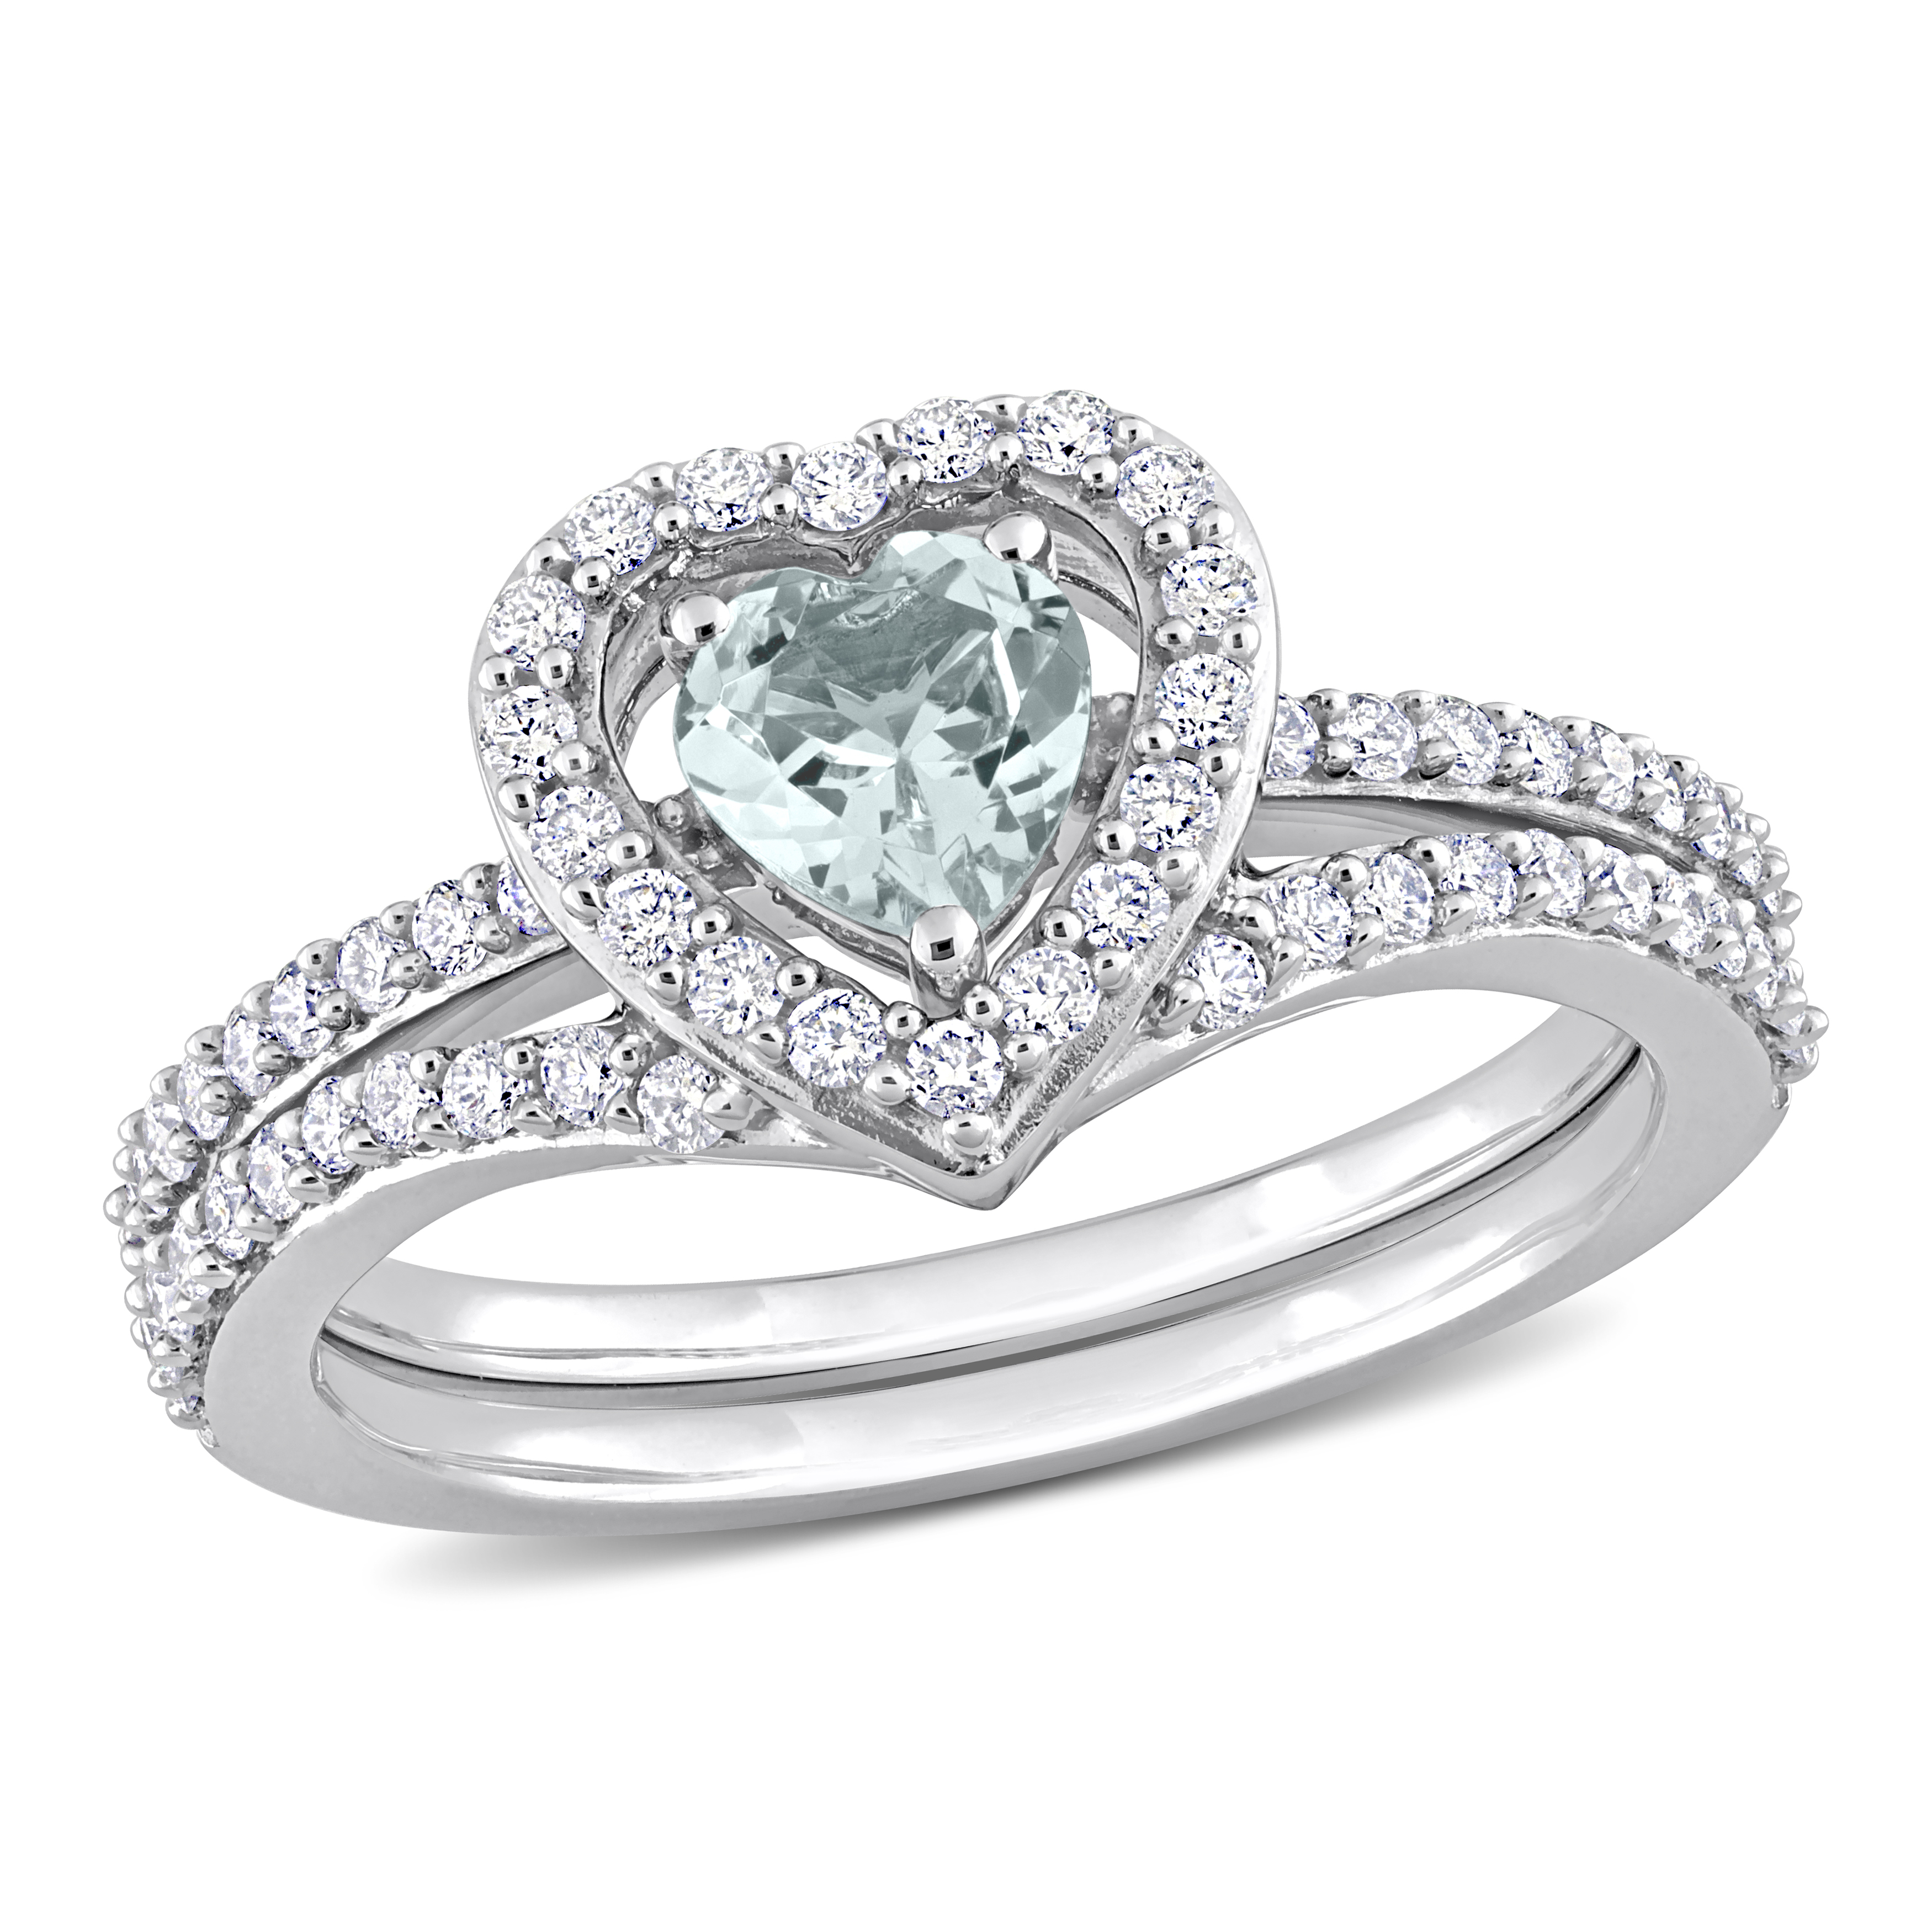 1/2 CT TDW Heart-Shape Diamond and 1/3 CT TGW Aquamarine Bridal Ring Set in 10k White Gold